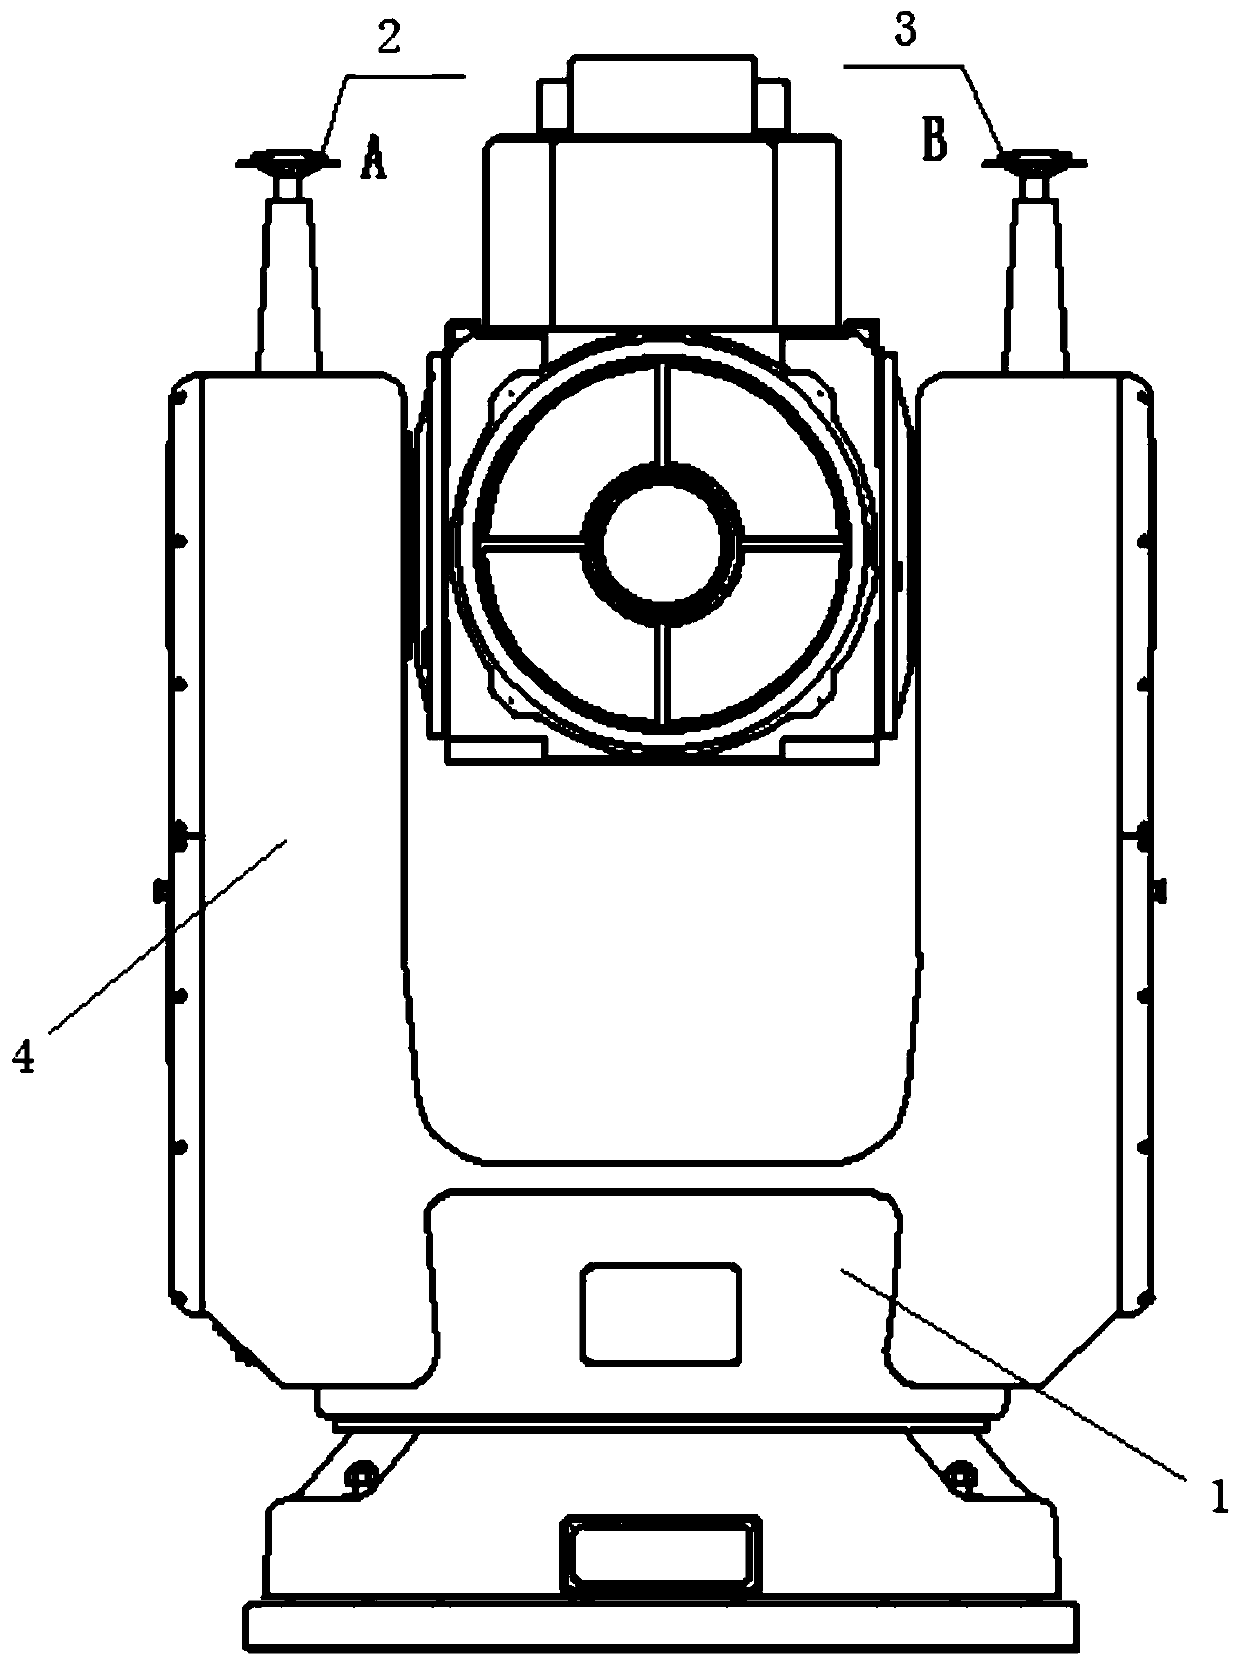 Self-positioning system and method based on vehicle-mounted theodolite